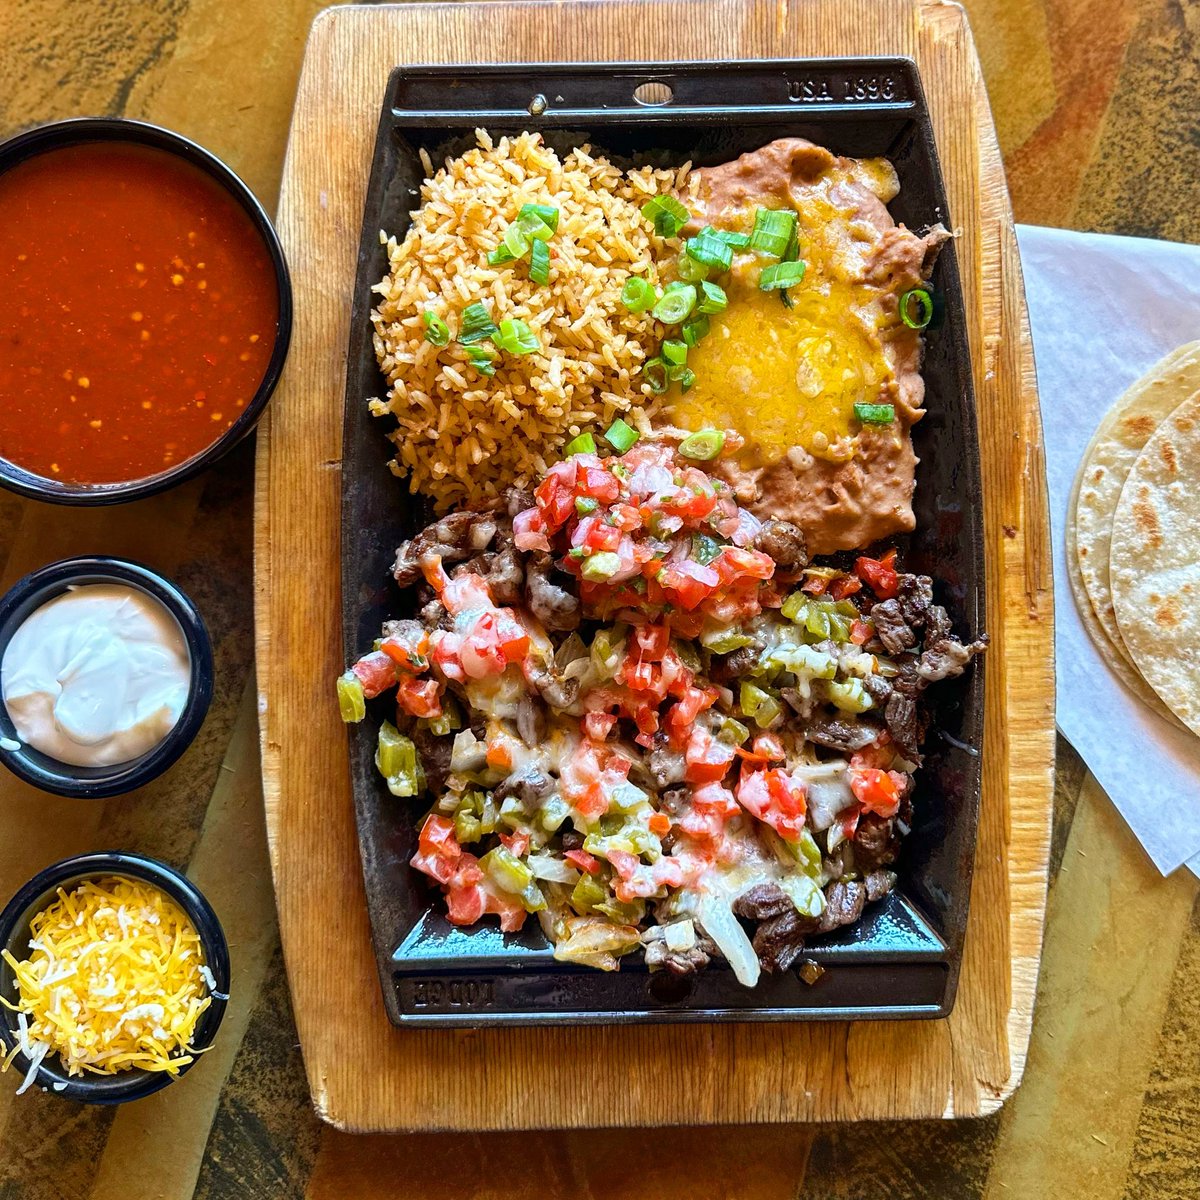 Add your favorite Mexican beer or margarita and serve! #mexicancomfortfood #picado #steakpicado #since1986 #mexicanfoodisthebest #margarita #mexicanbeer